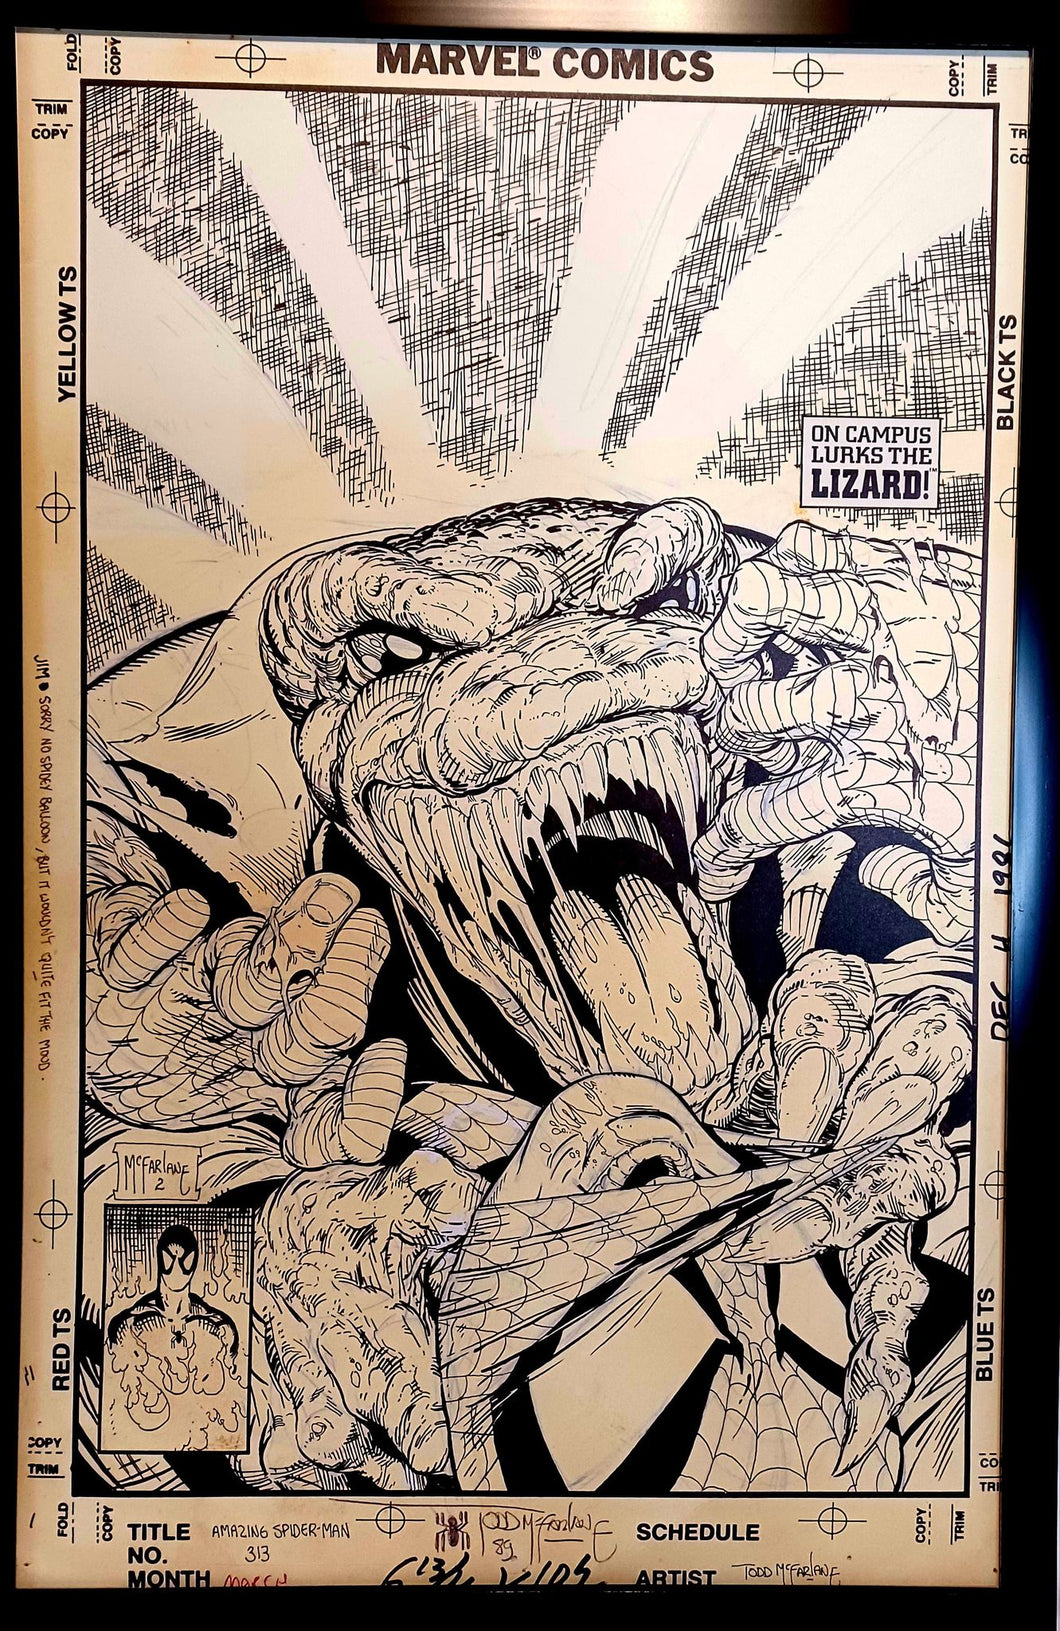 Amazing Spider-Man #313 by Todd McFarlane 11x17 FRAMED Original Art Print Comic Poster